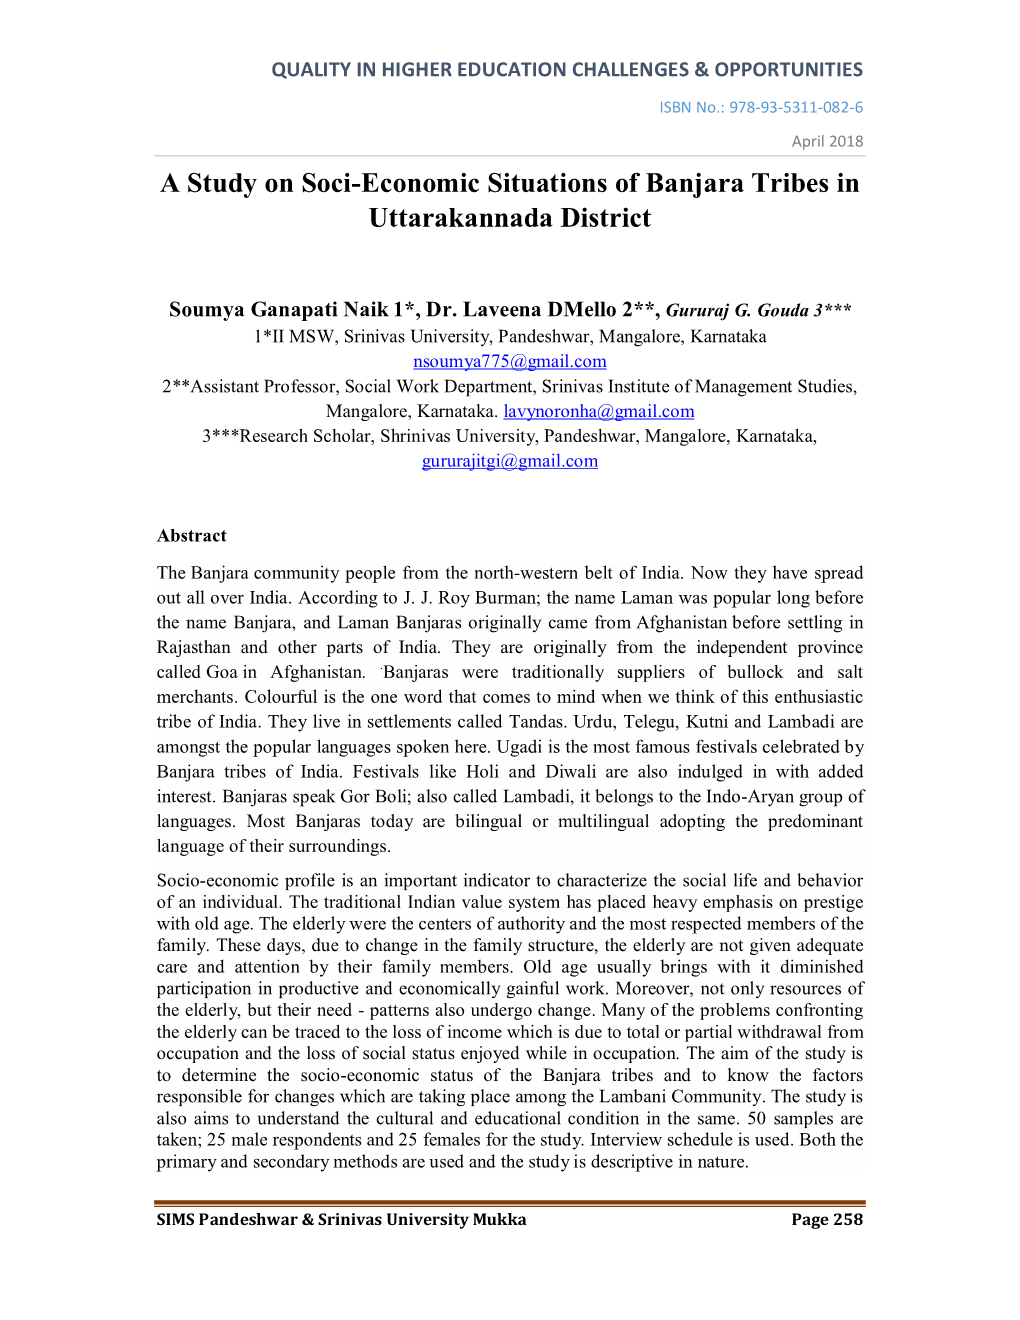 A Study on Soci-Economic Situations of Banjara Tribes in Uttarakannada District